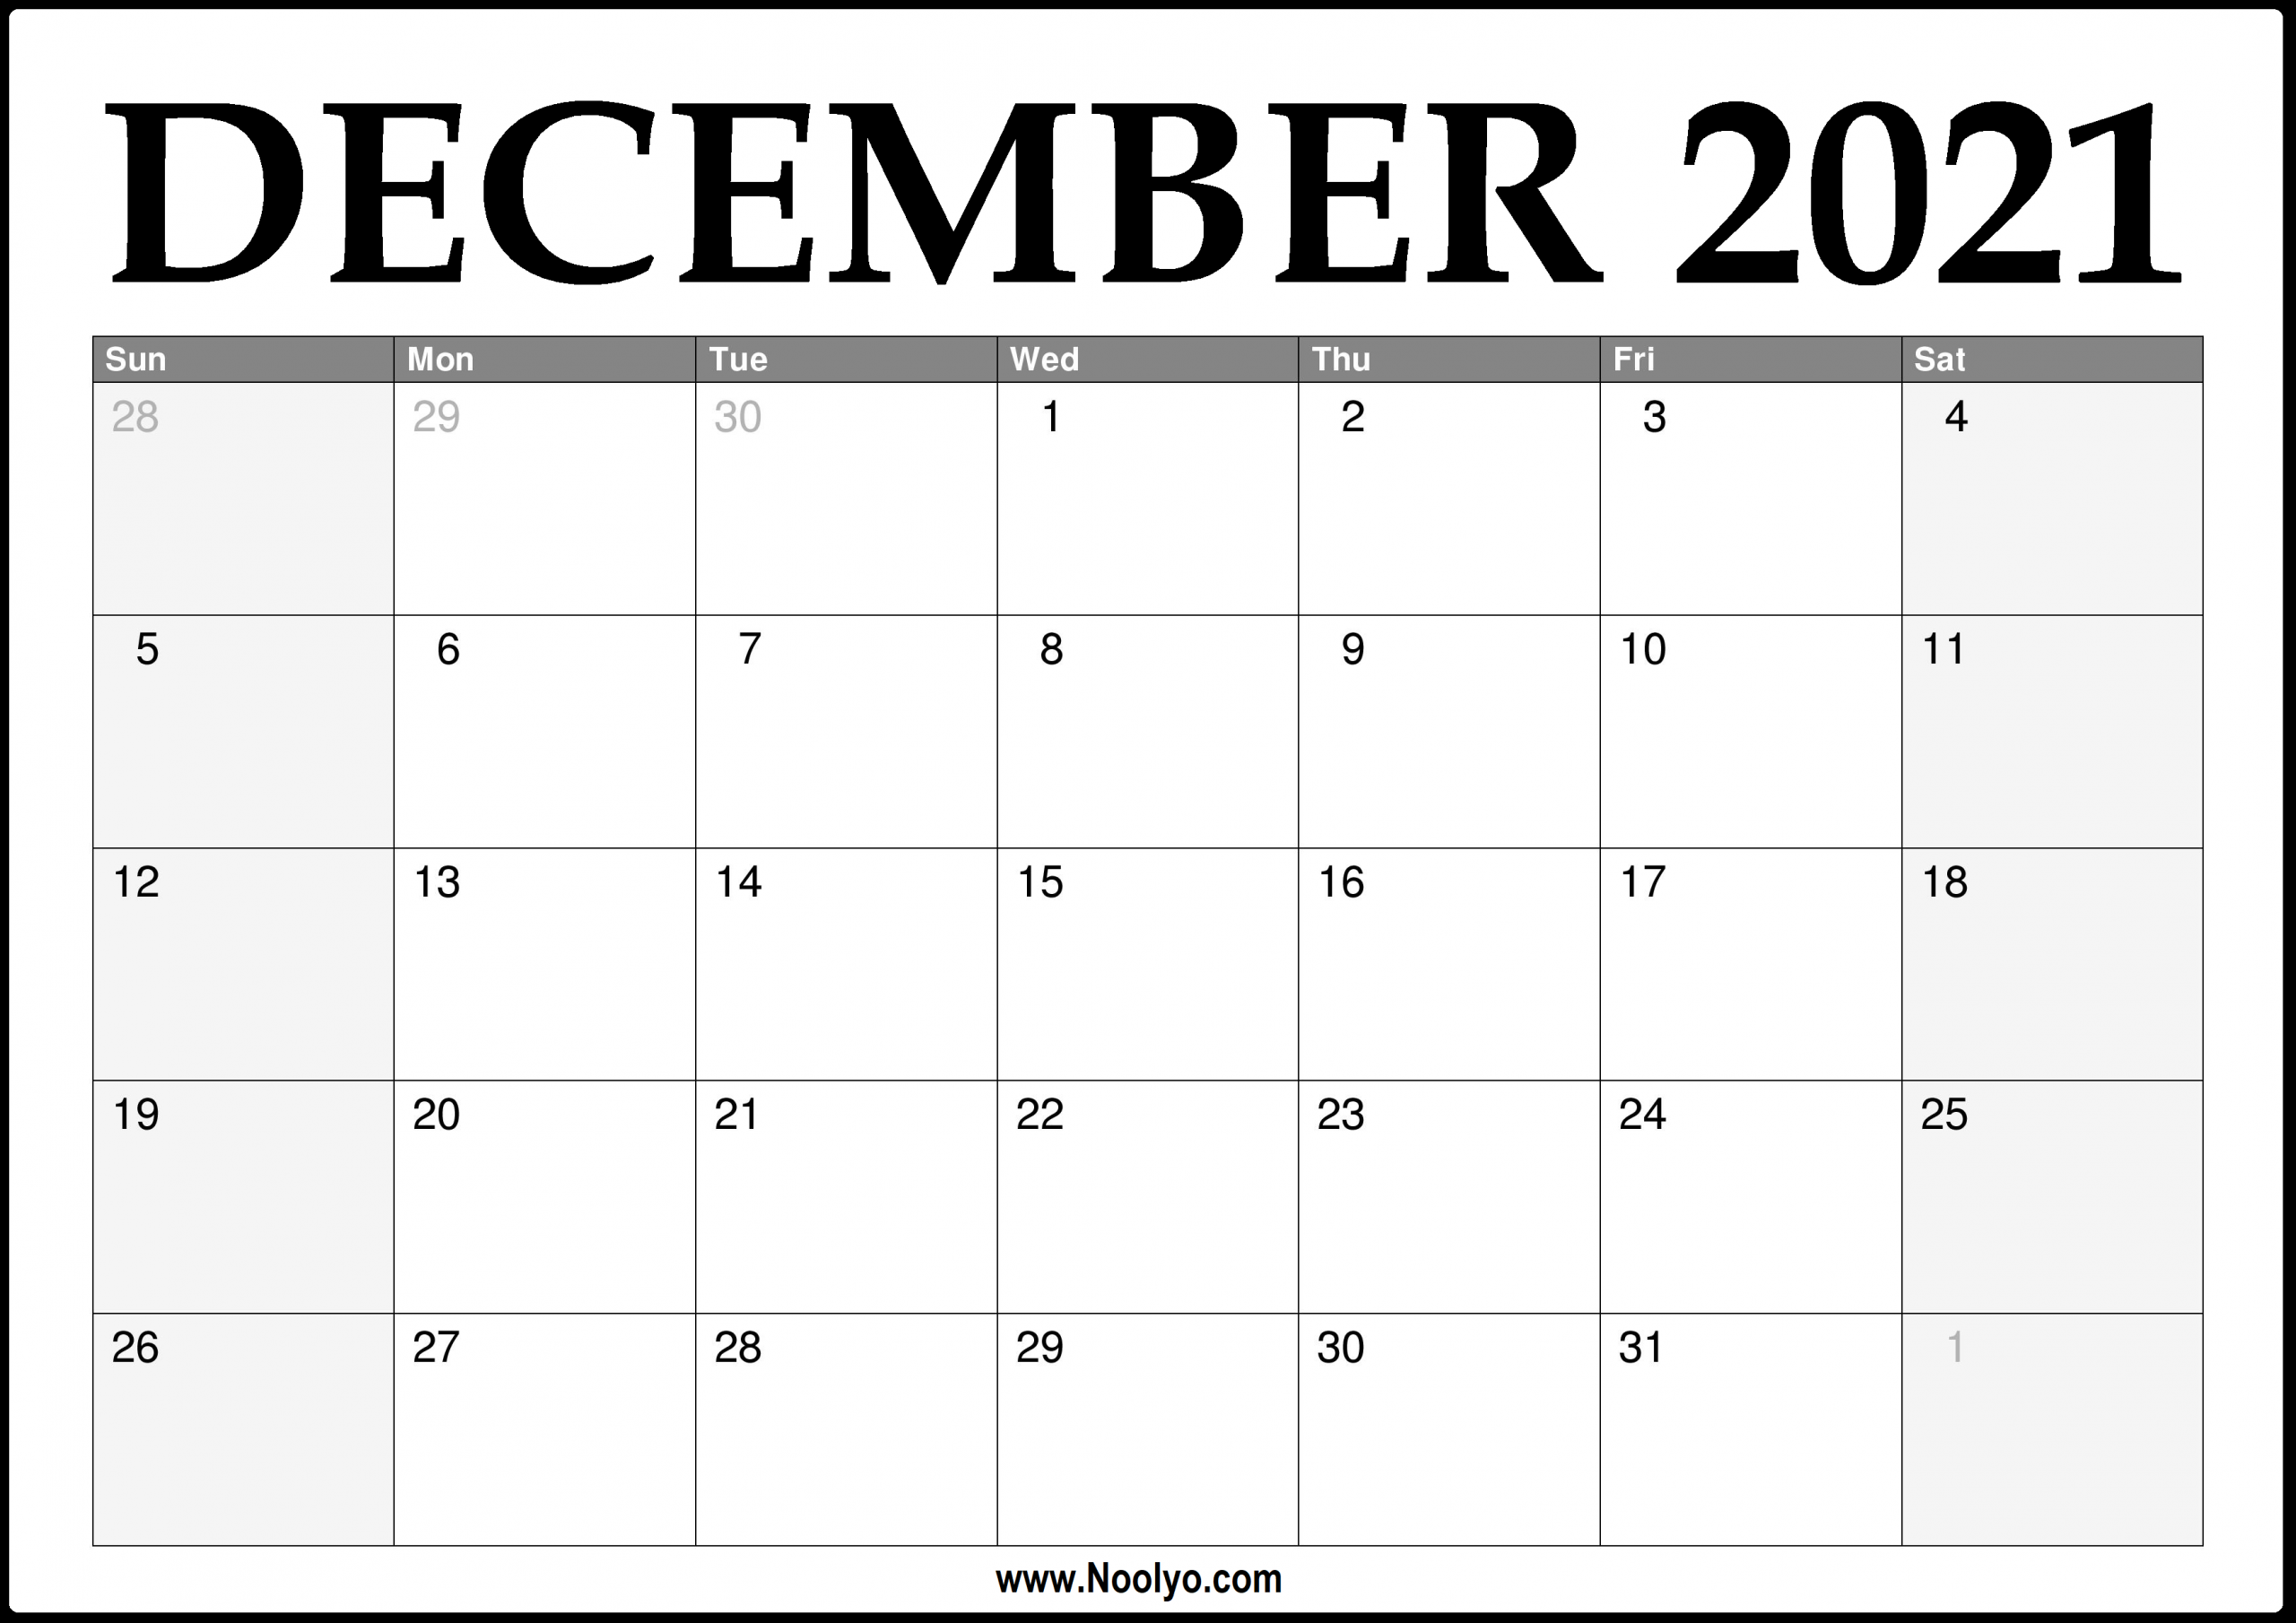 2021 December Calendar Printable - Download Free - Noolyo Printable December 2021 Calendar